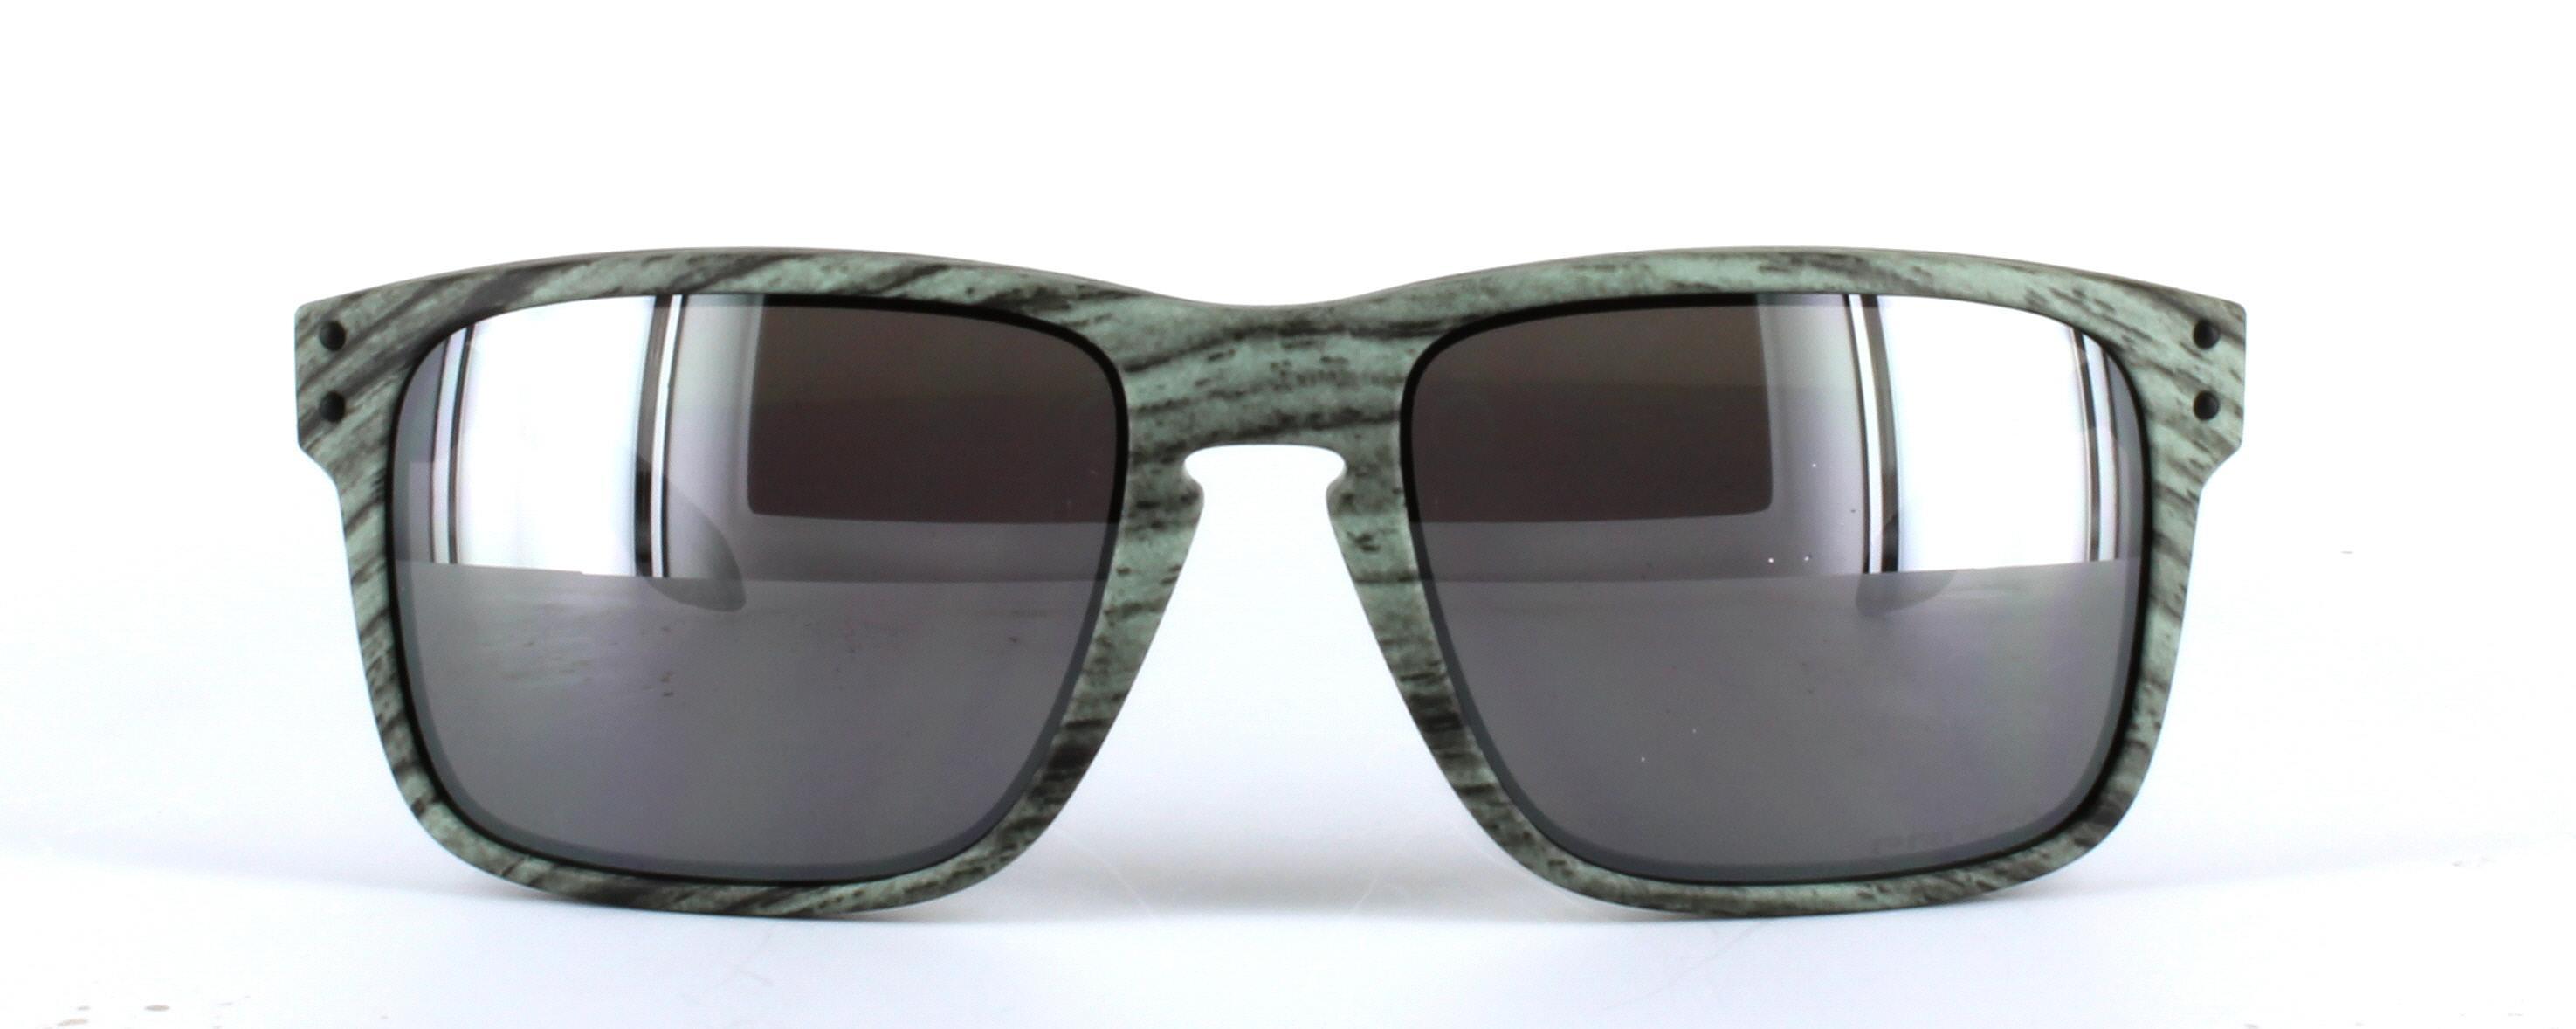 Oakley Ivywood Grey Full Rim Plastic Sunglasses - Image View 5